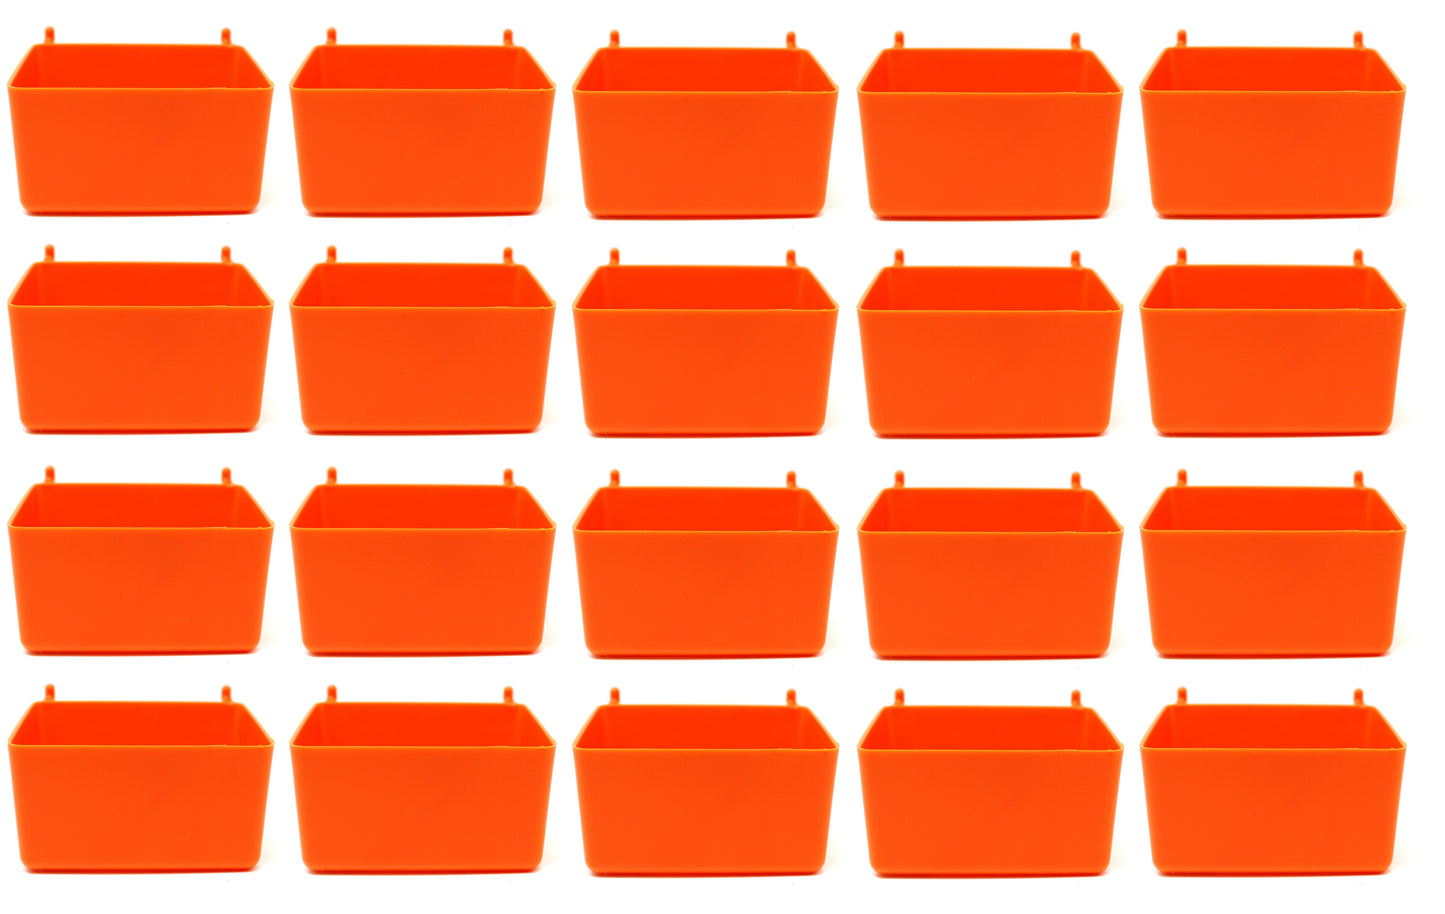 Small Plastic Orange Pegboard Storage / Part Bins - Heavy Duty - Multi Pack